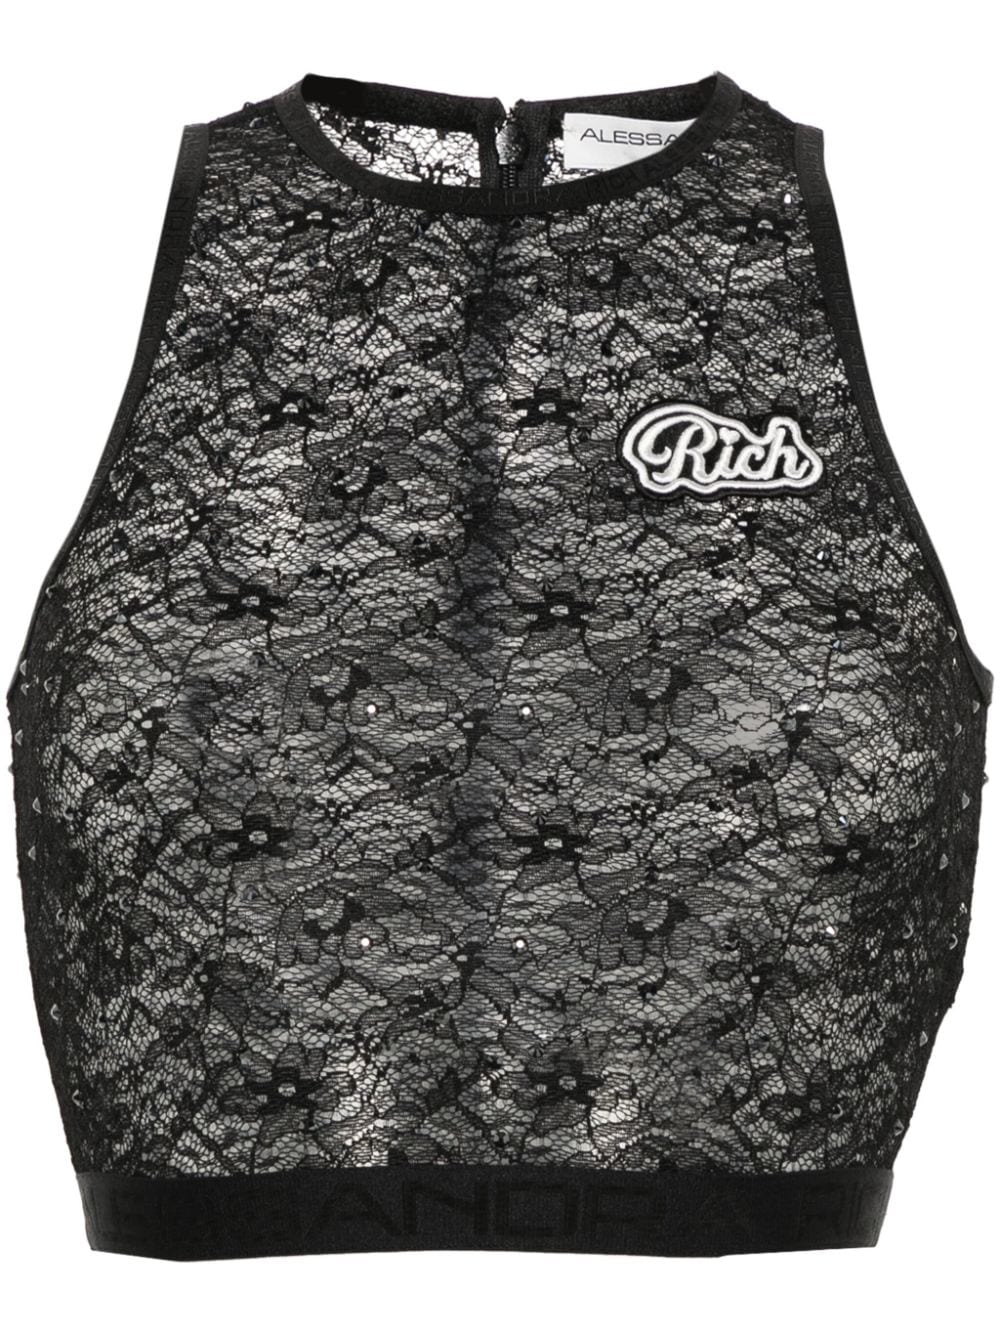 Alessandra Rich cropped lace tank top - Black von Alessandra Rich